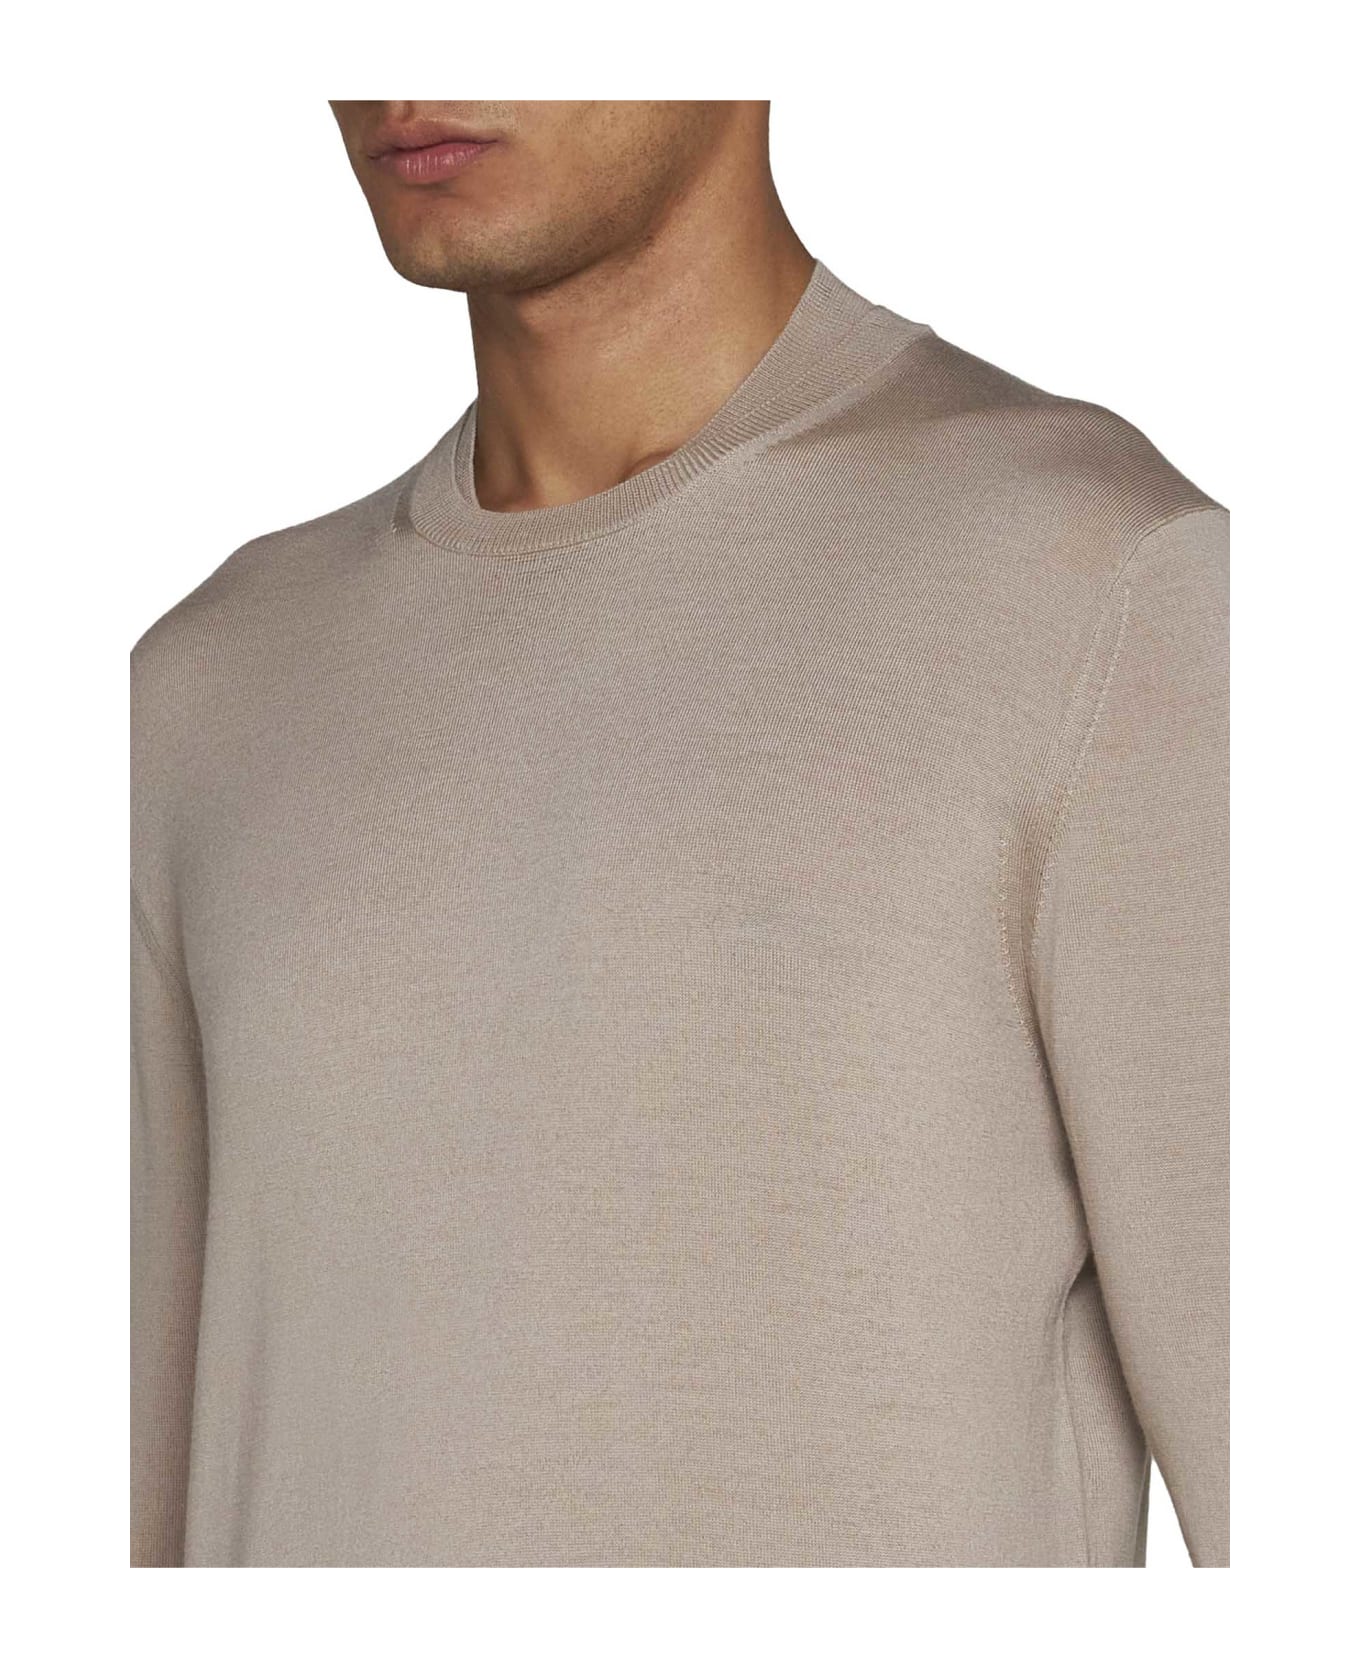 Low Brand Sweater - Bone white